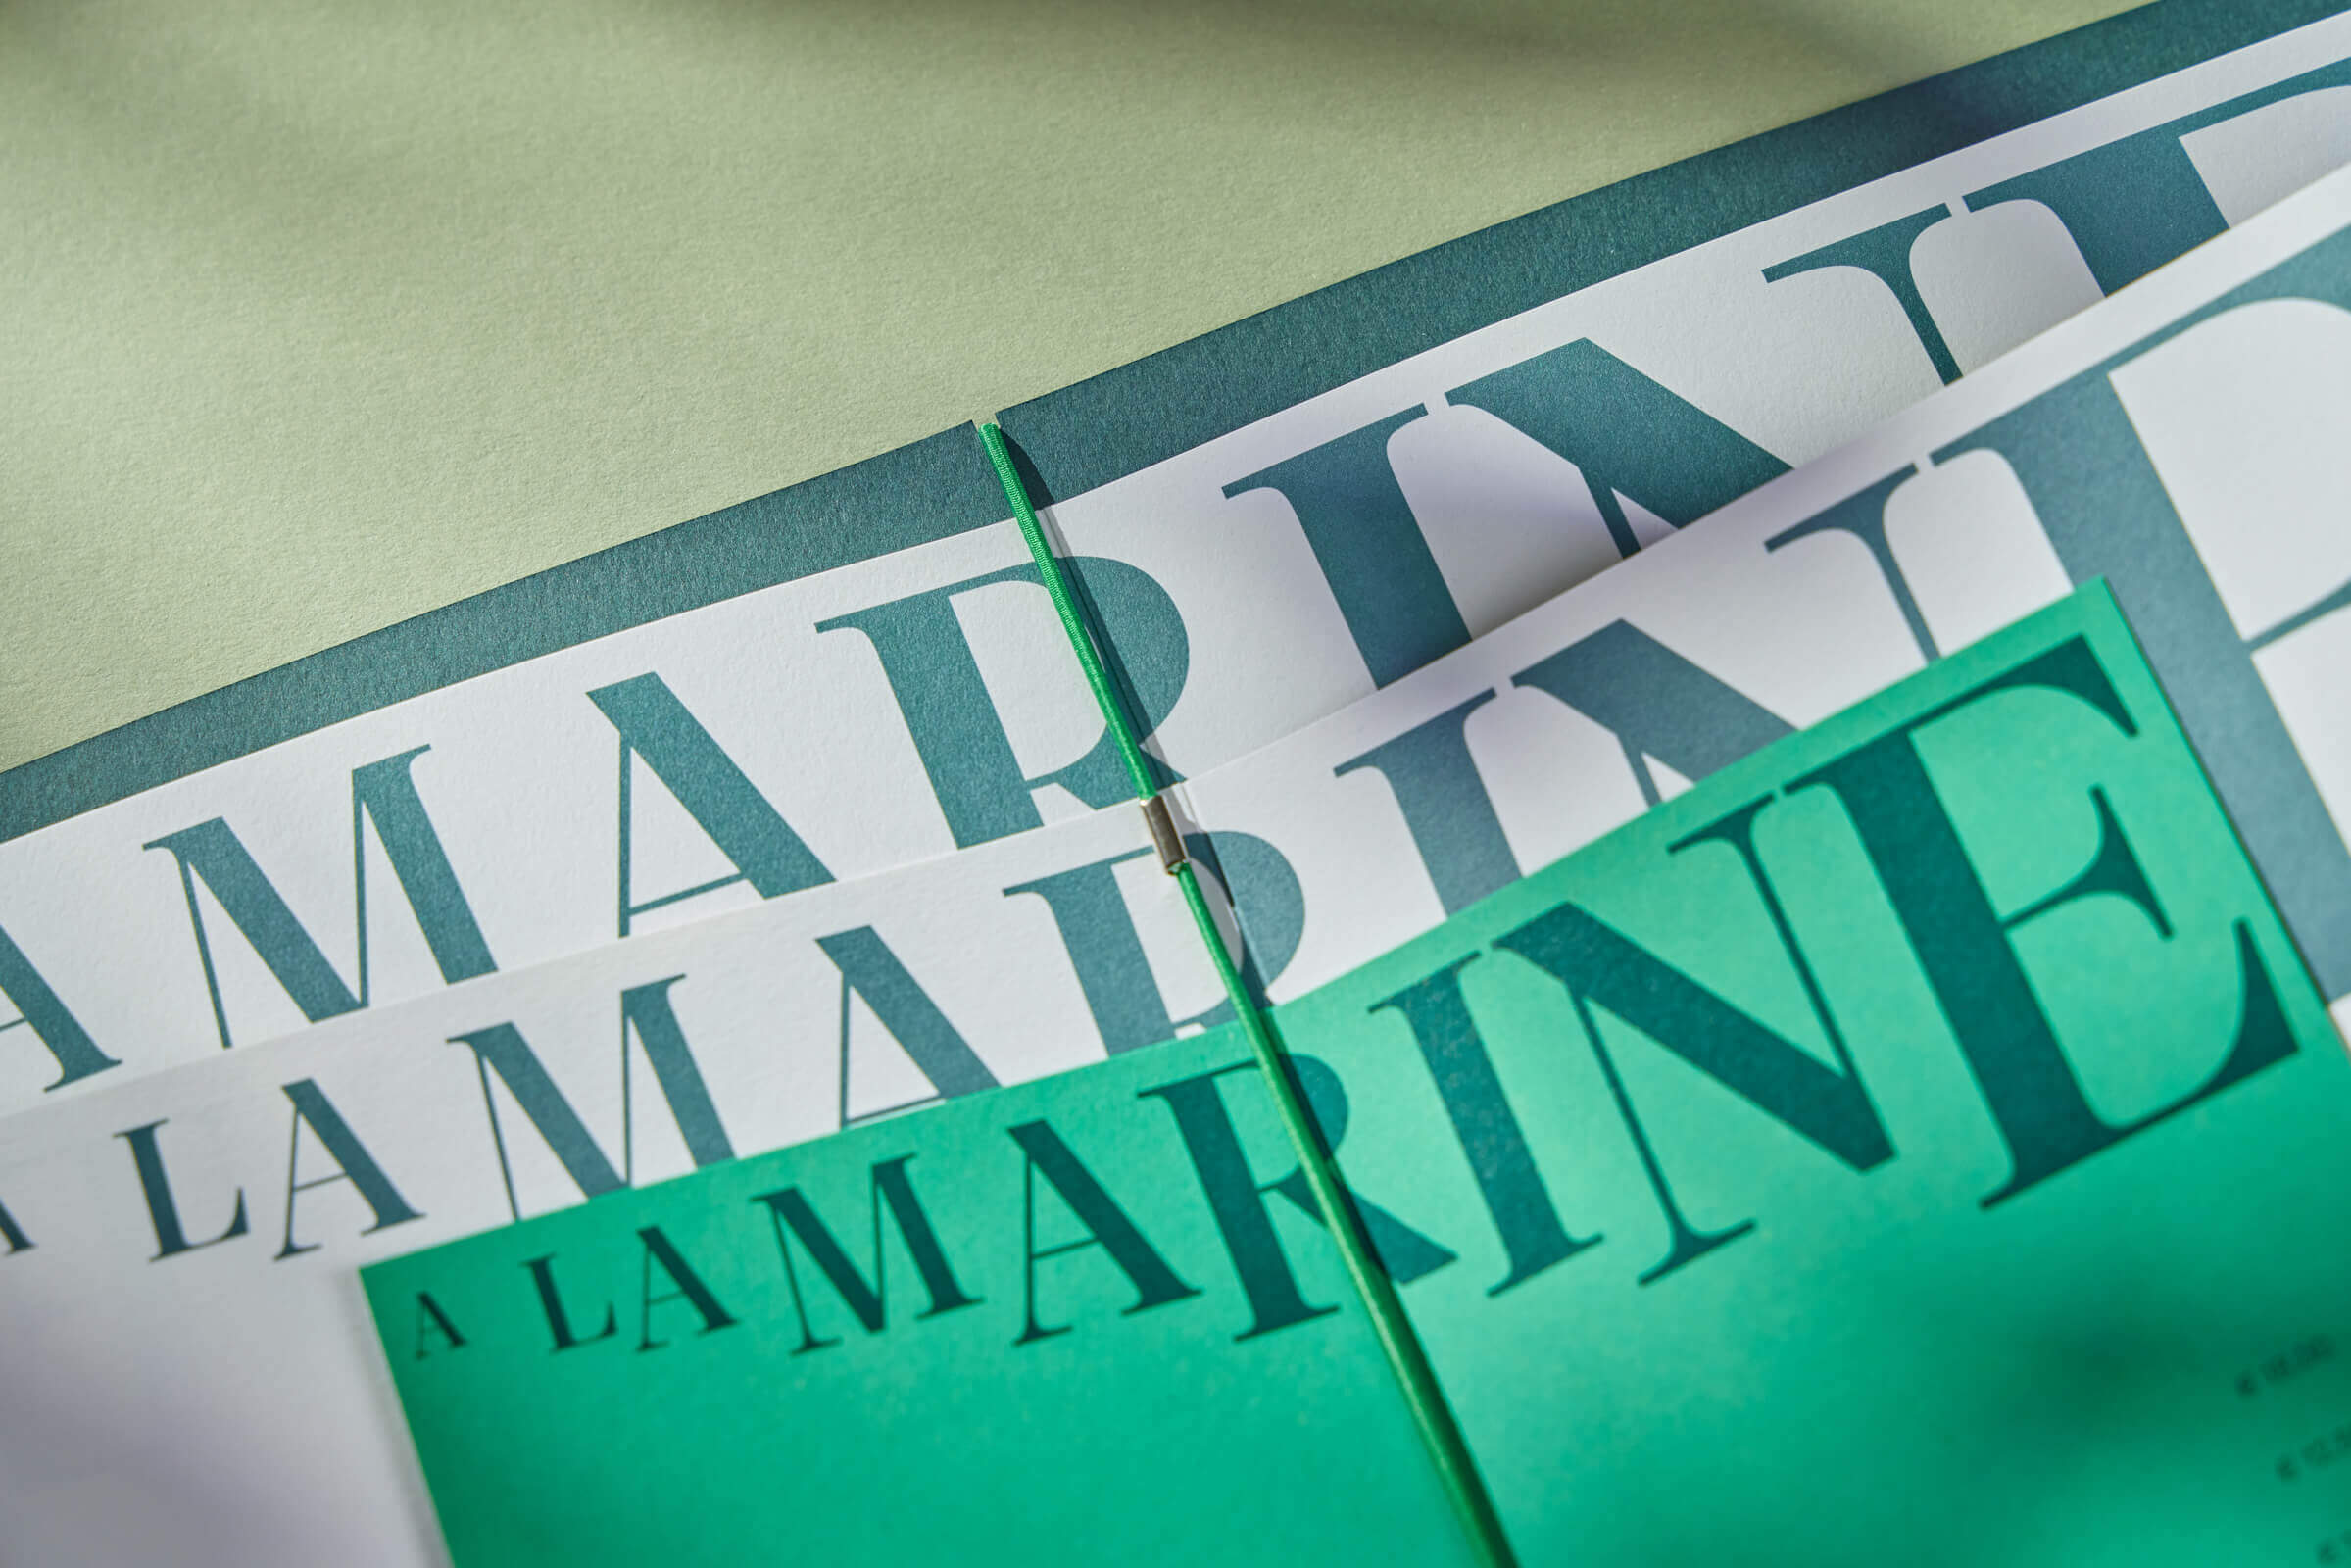 A La Marine Menukaarten detail met groene elasto